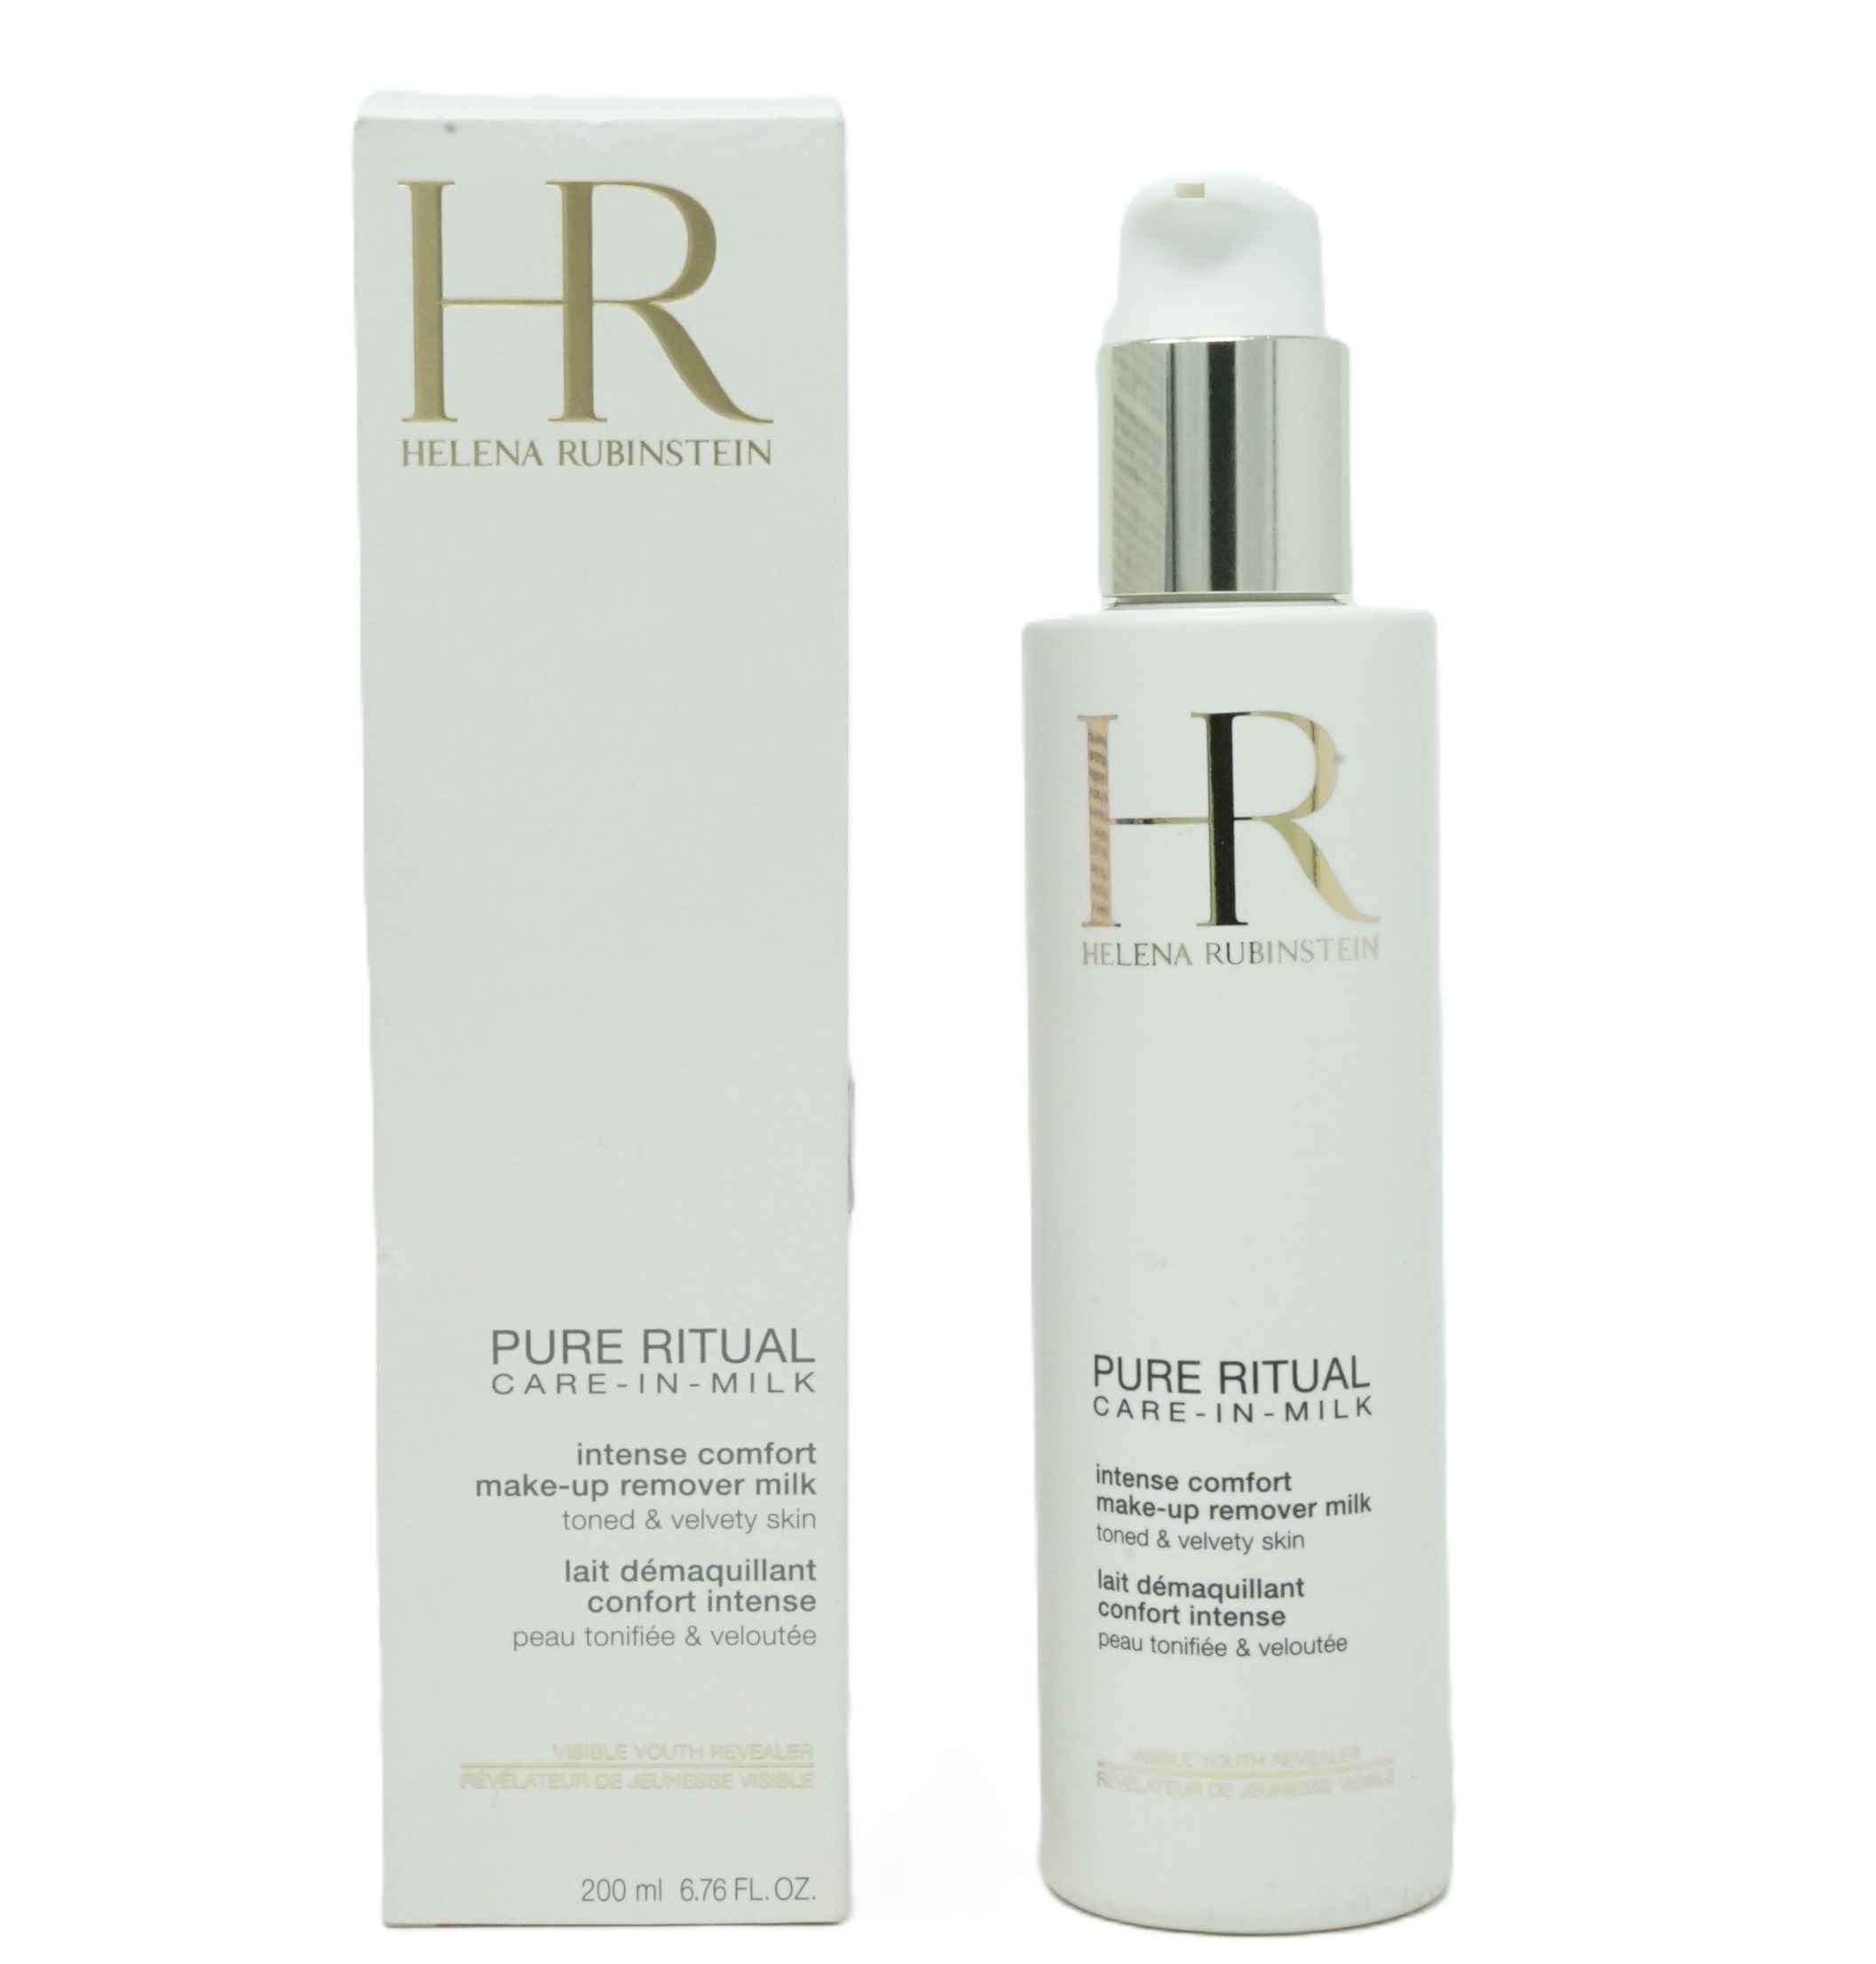 Helena Rubinstein Pure Ritual Care-in-Milk Make-up Remover milk 200ml